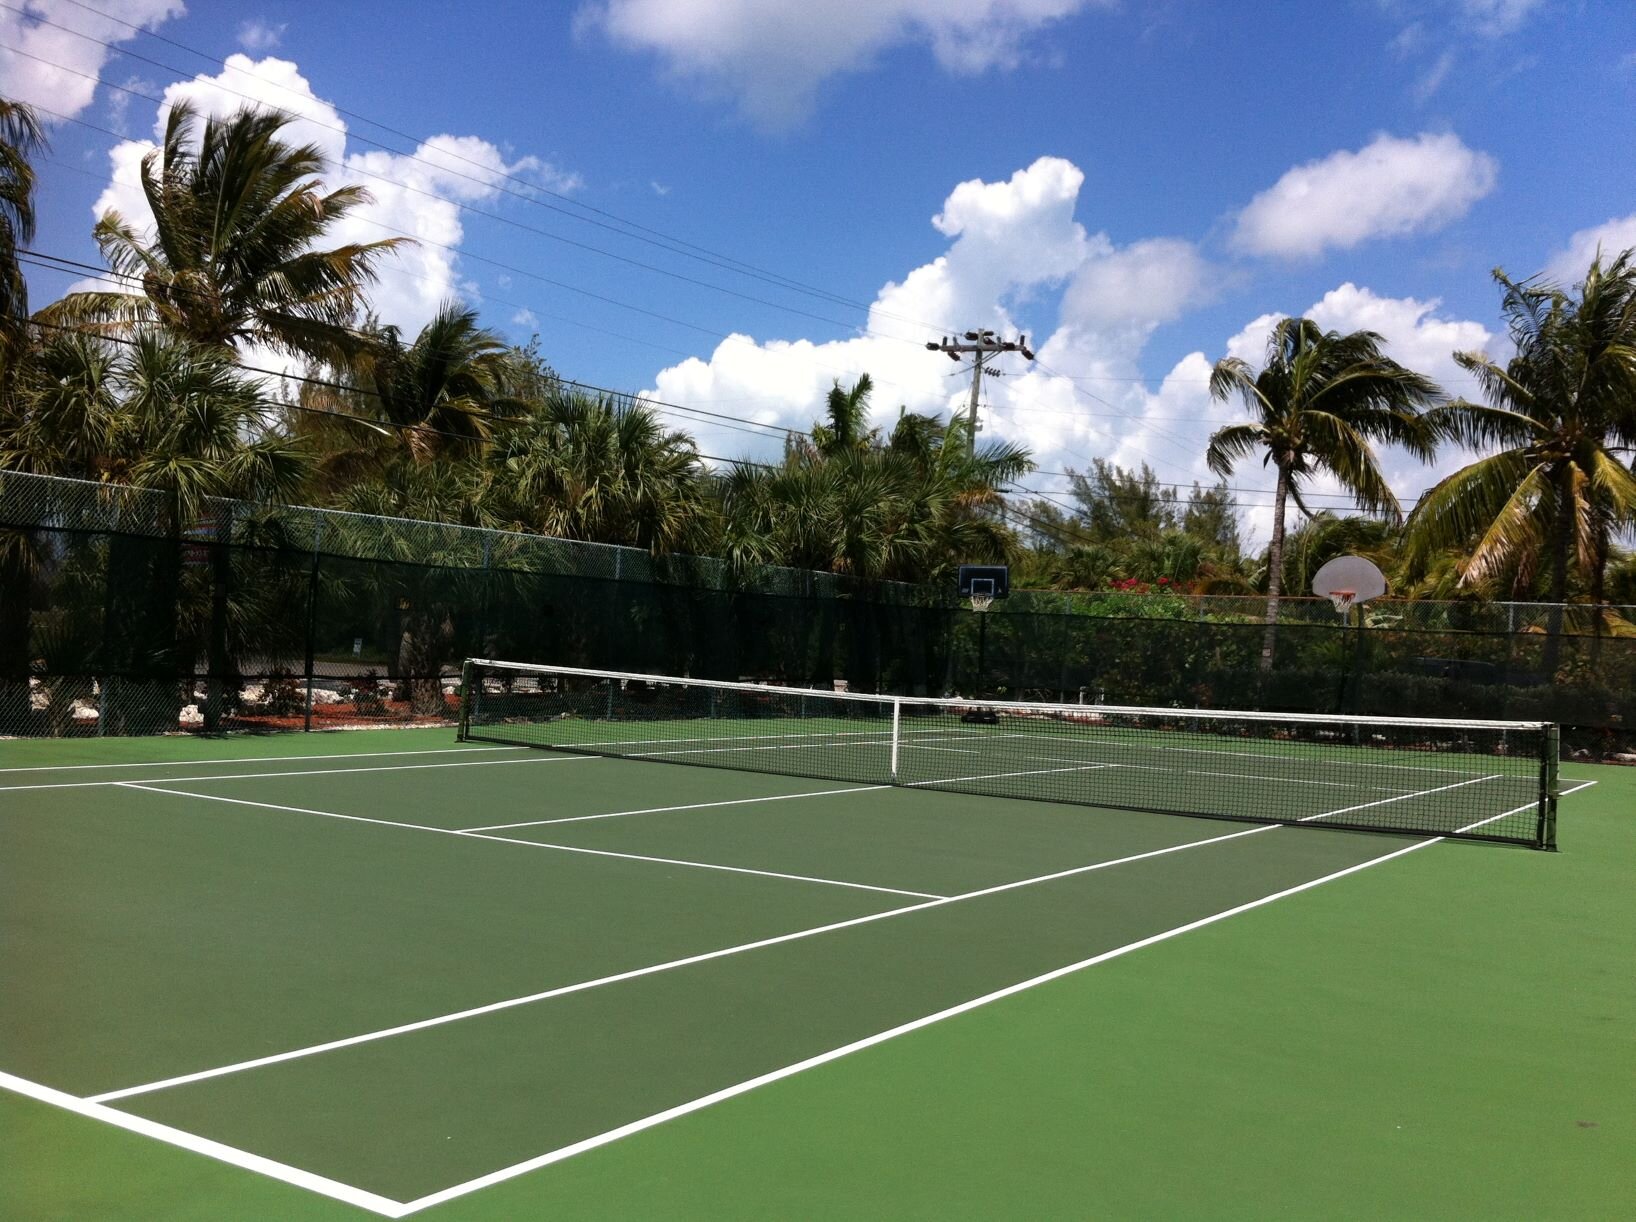 Property Photos — Coco Plum Beach and Tennis Club and Marina